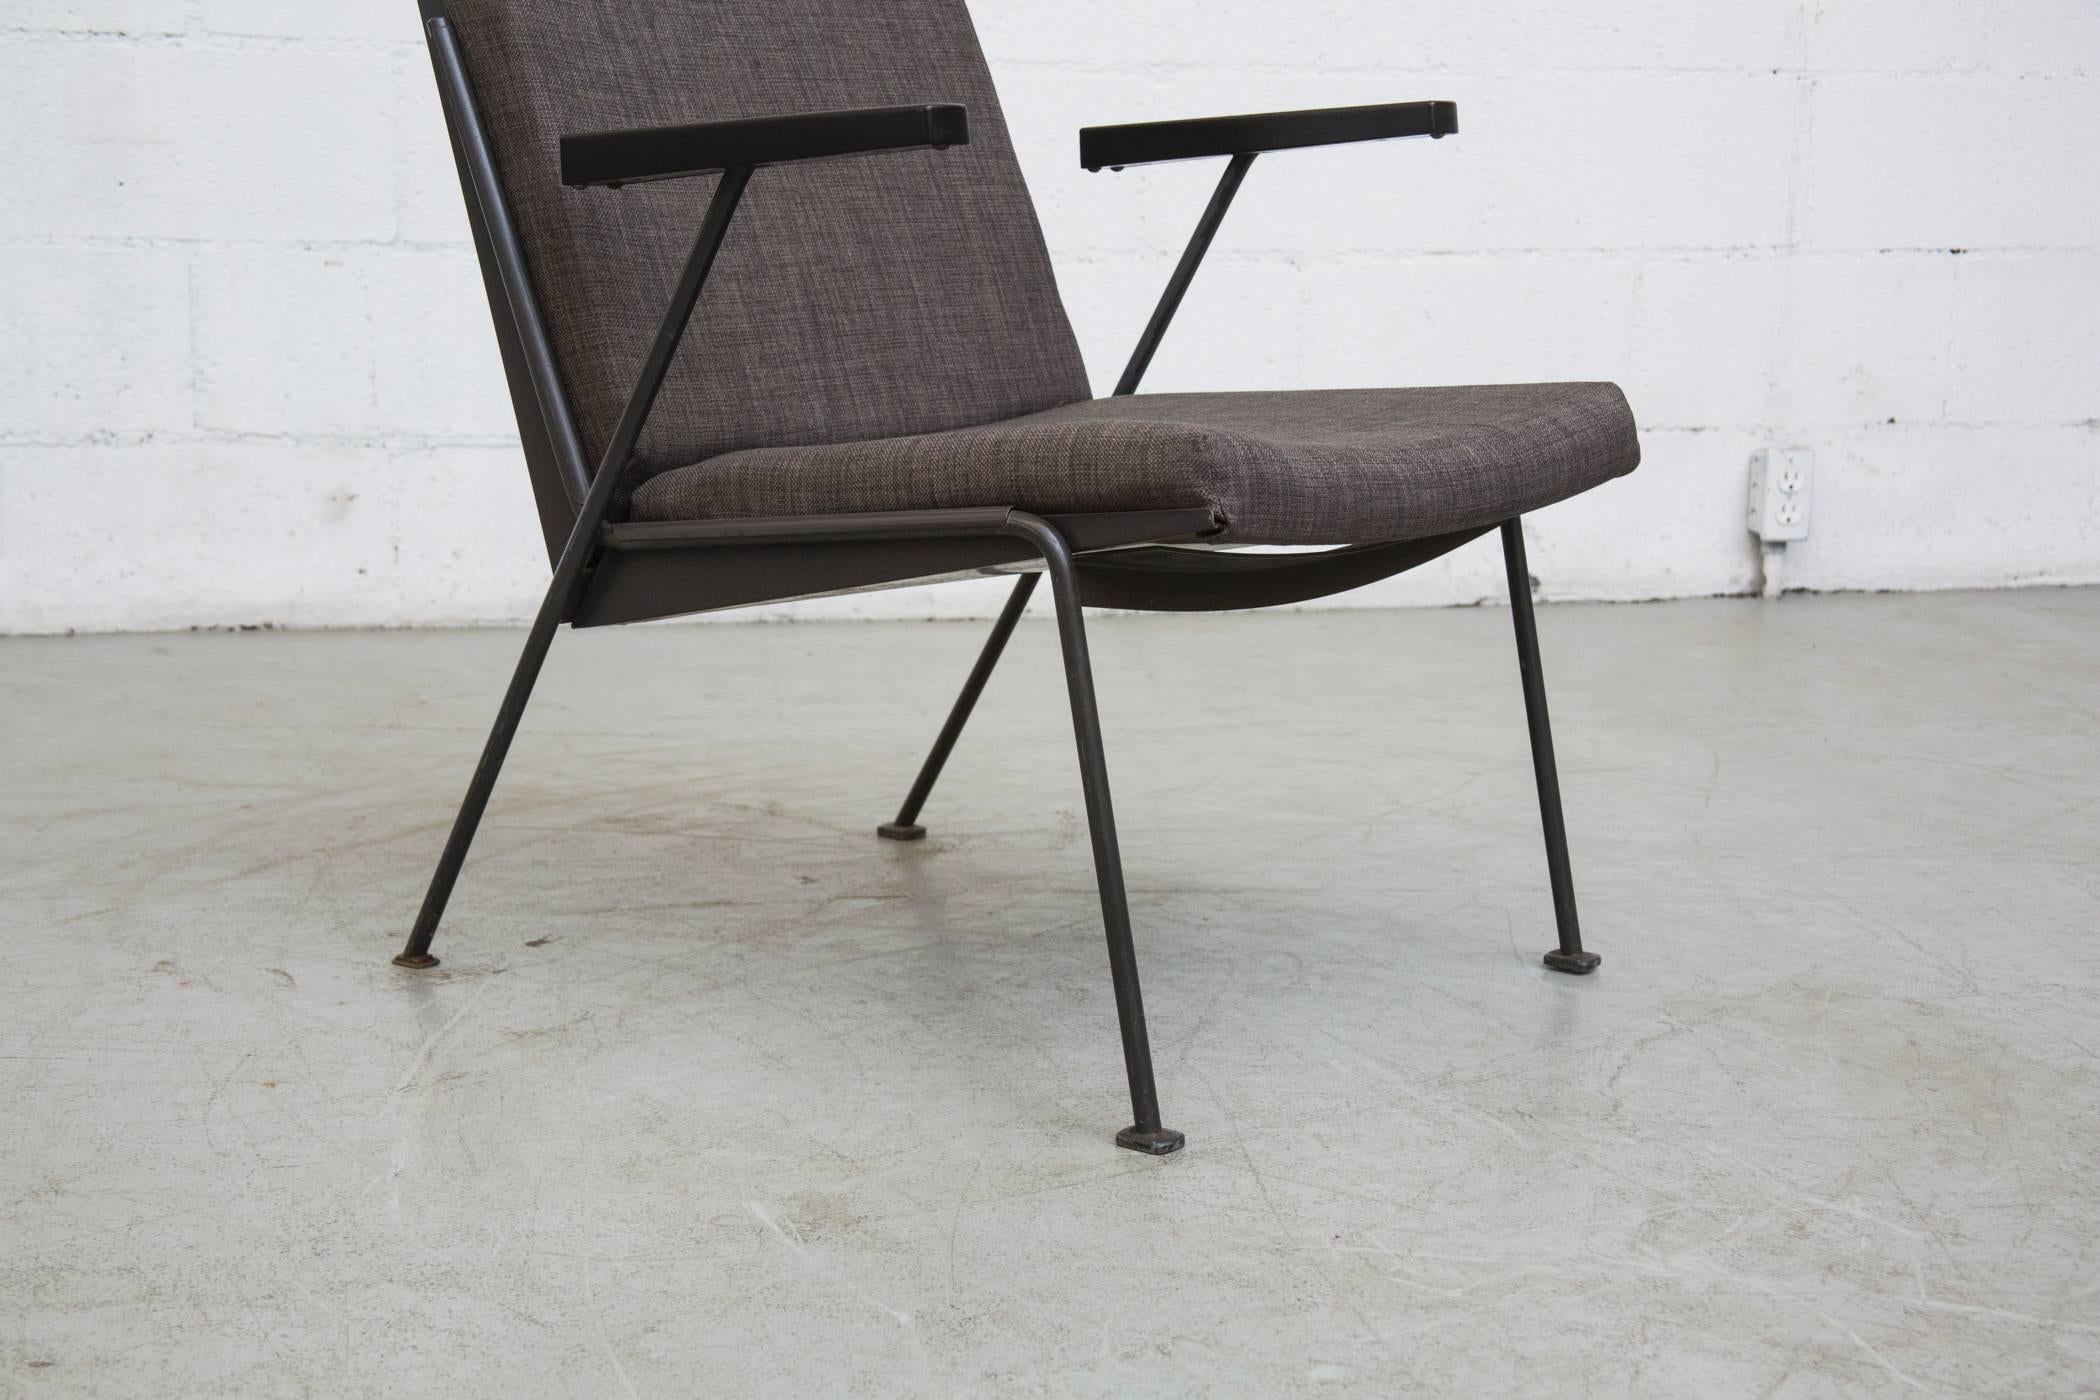 Bakelite Ahrend de Cirkel Oase Lounge Chair by Wim Reitveld